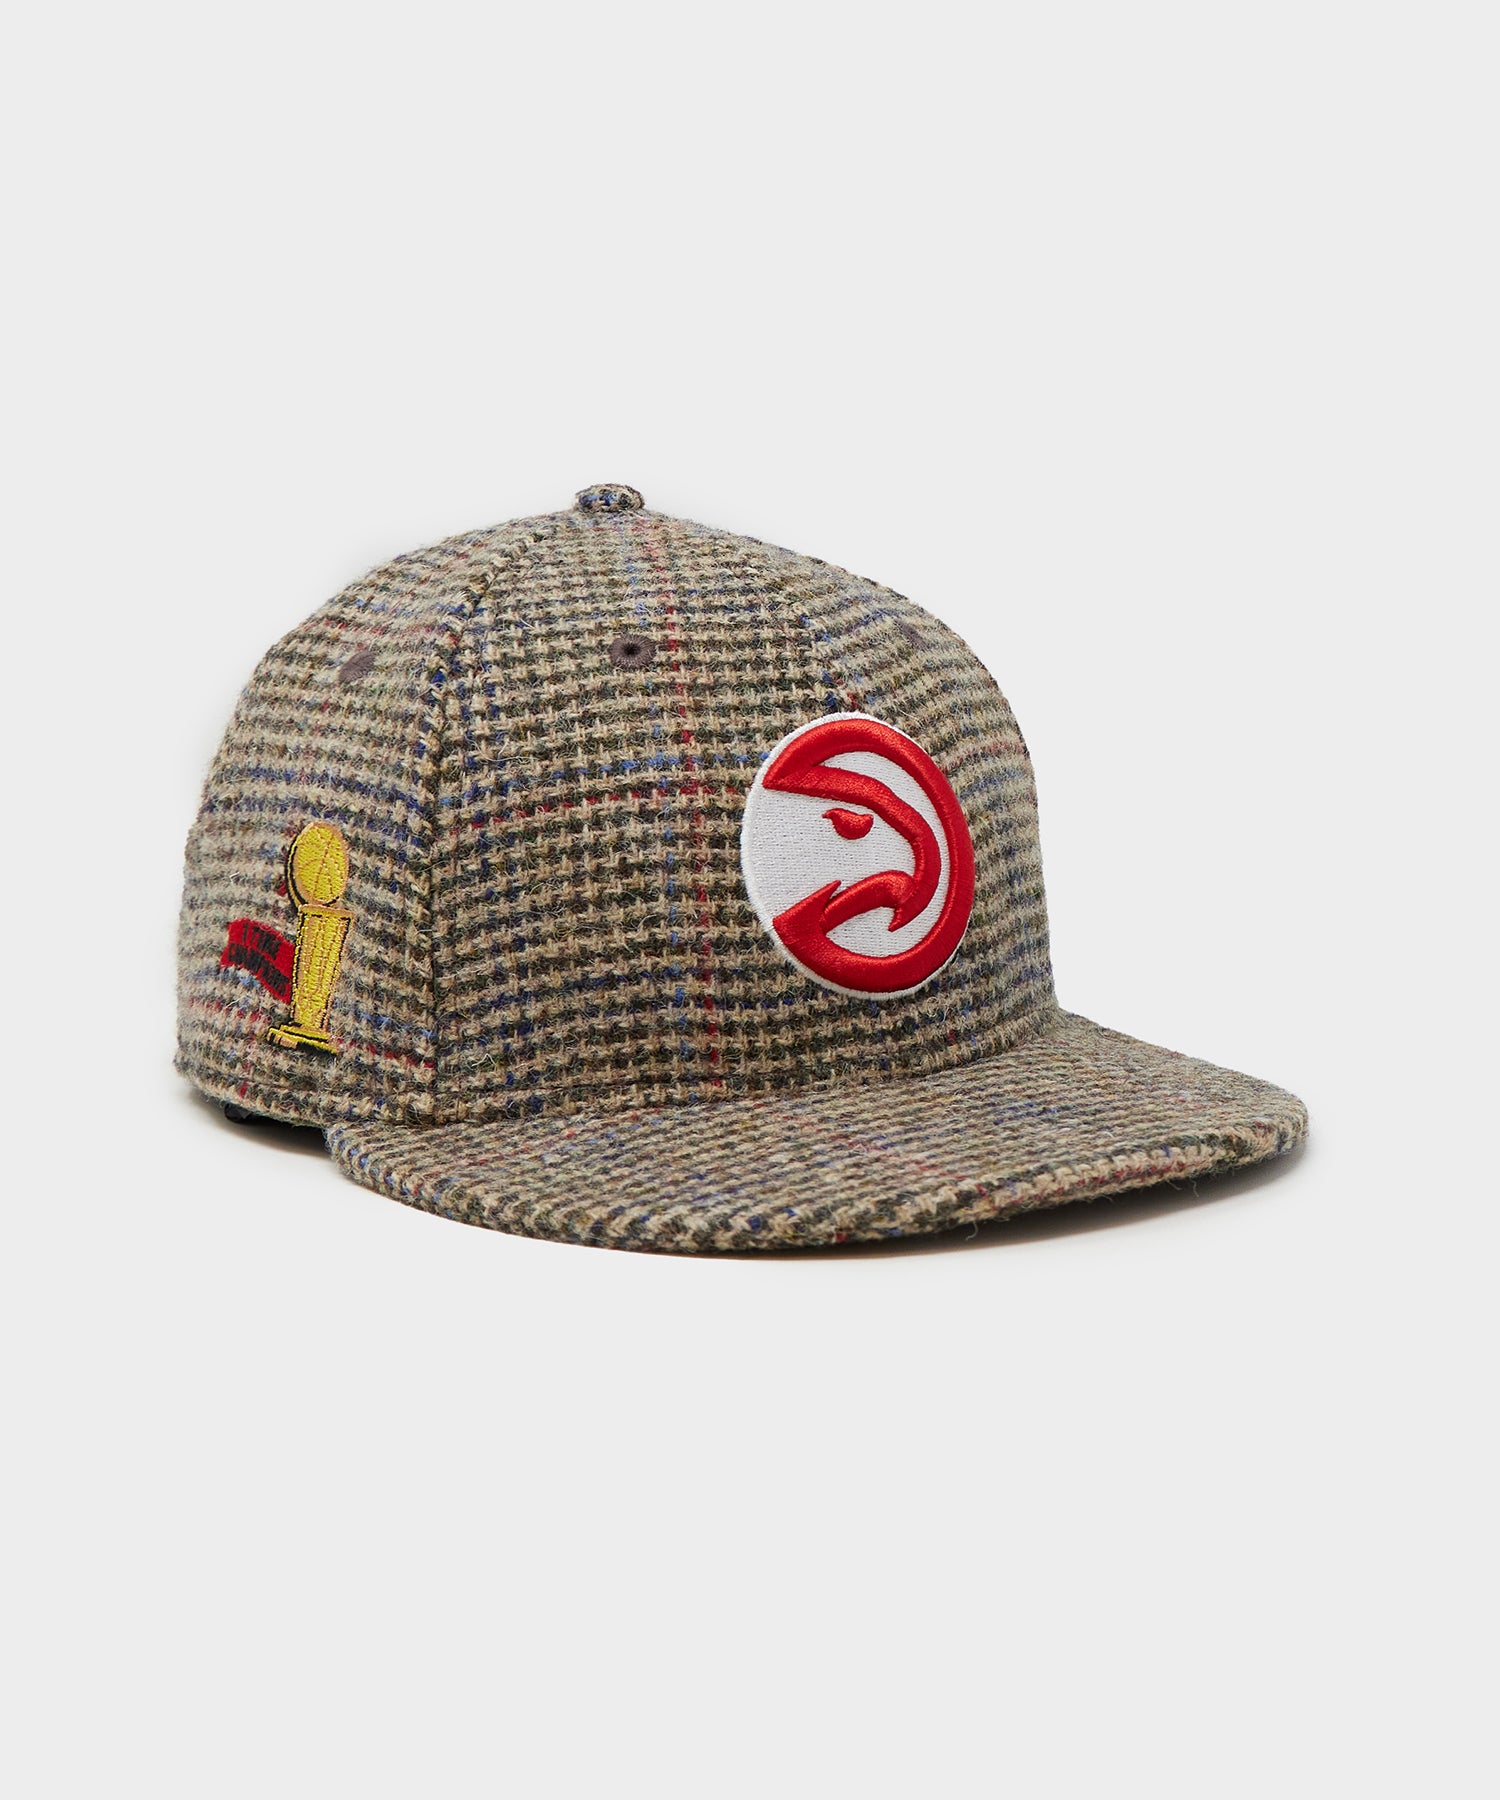 Todd Snyder X NBA Hawks New Era Hat